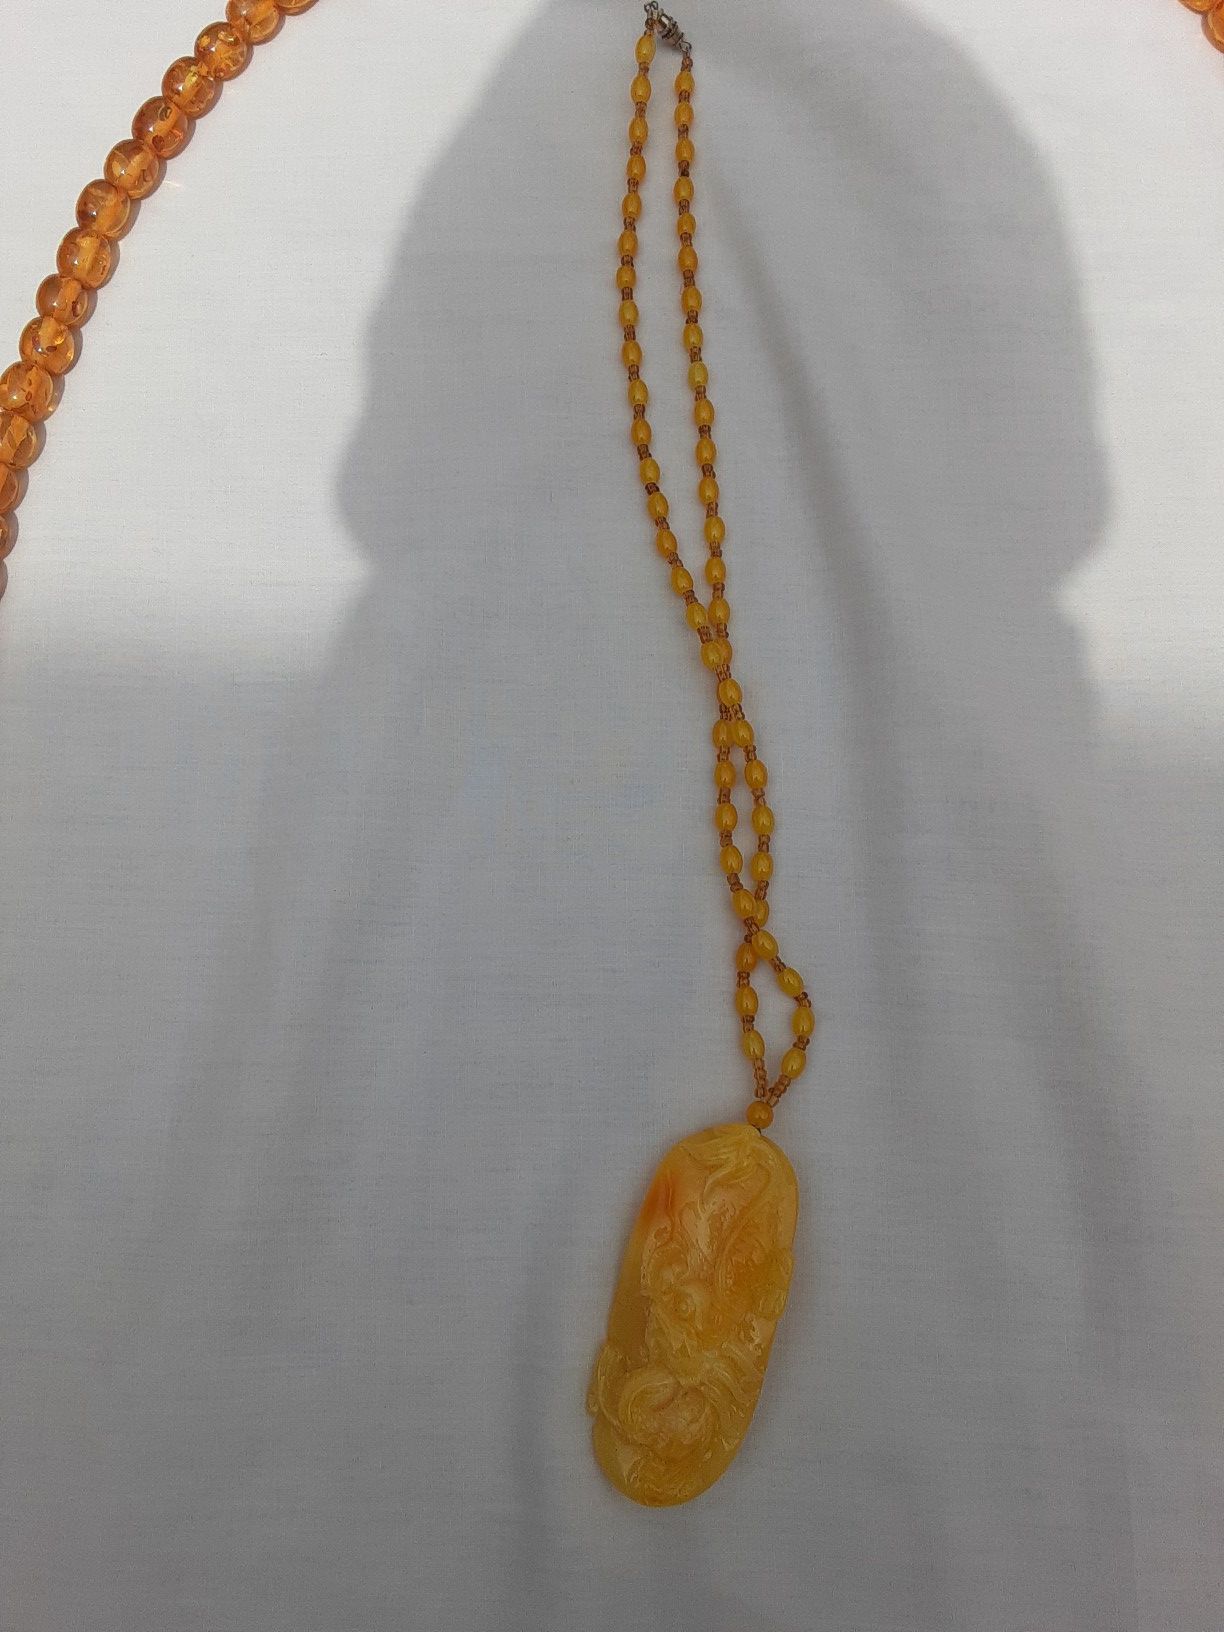 Honey amber necklace